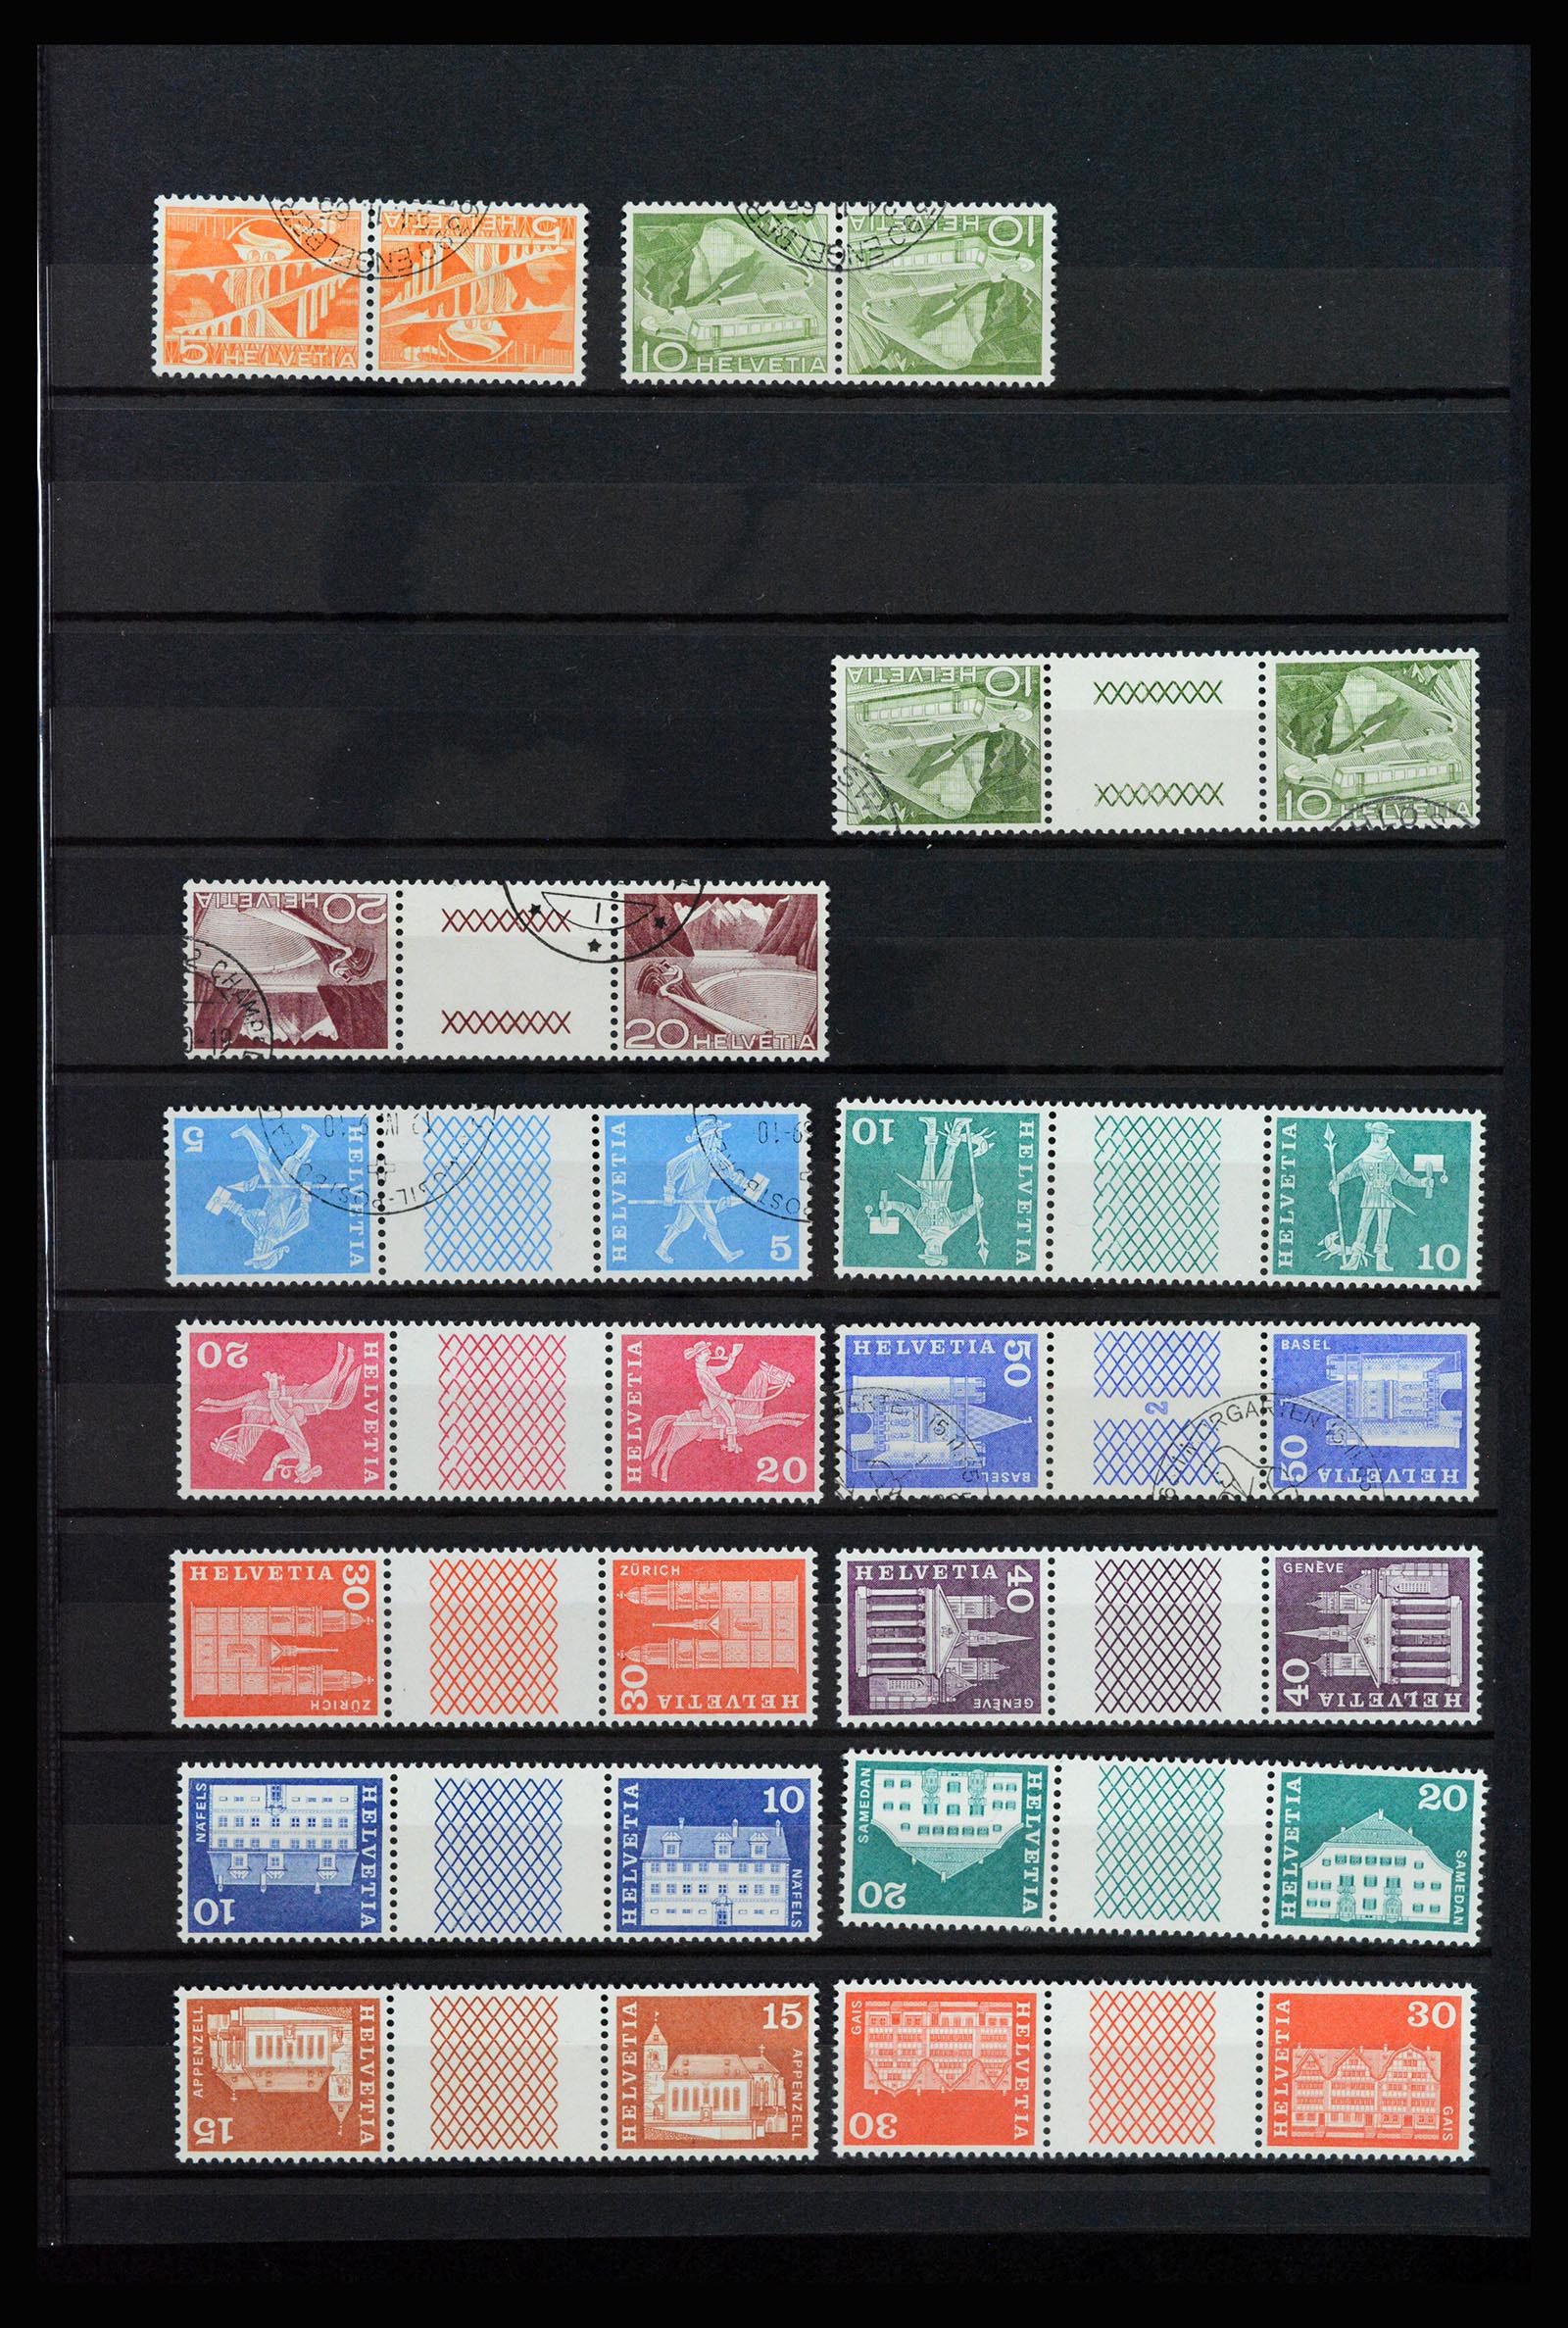 37225 171 - Stamp collection 37225 Switzerland 1854-2020.